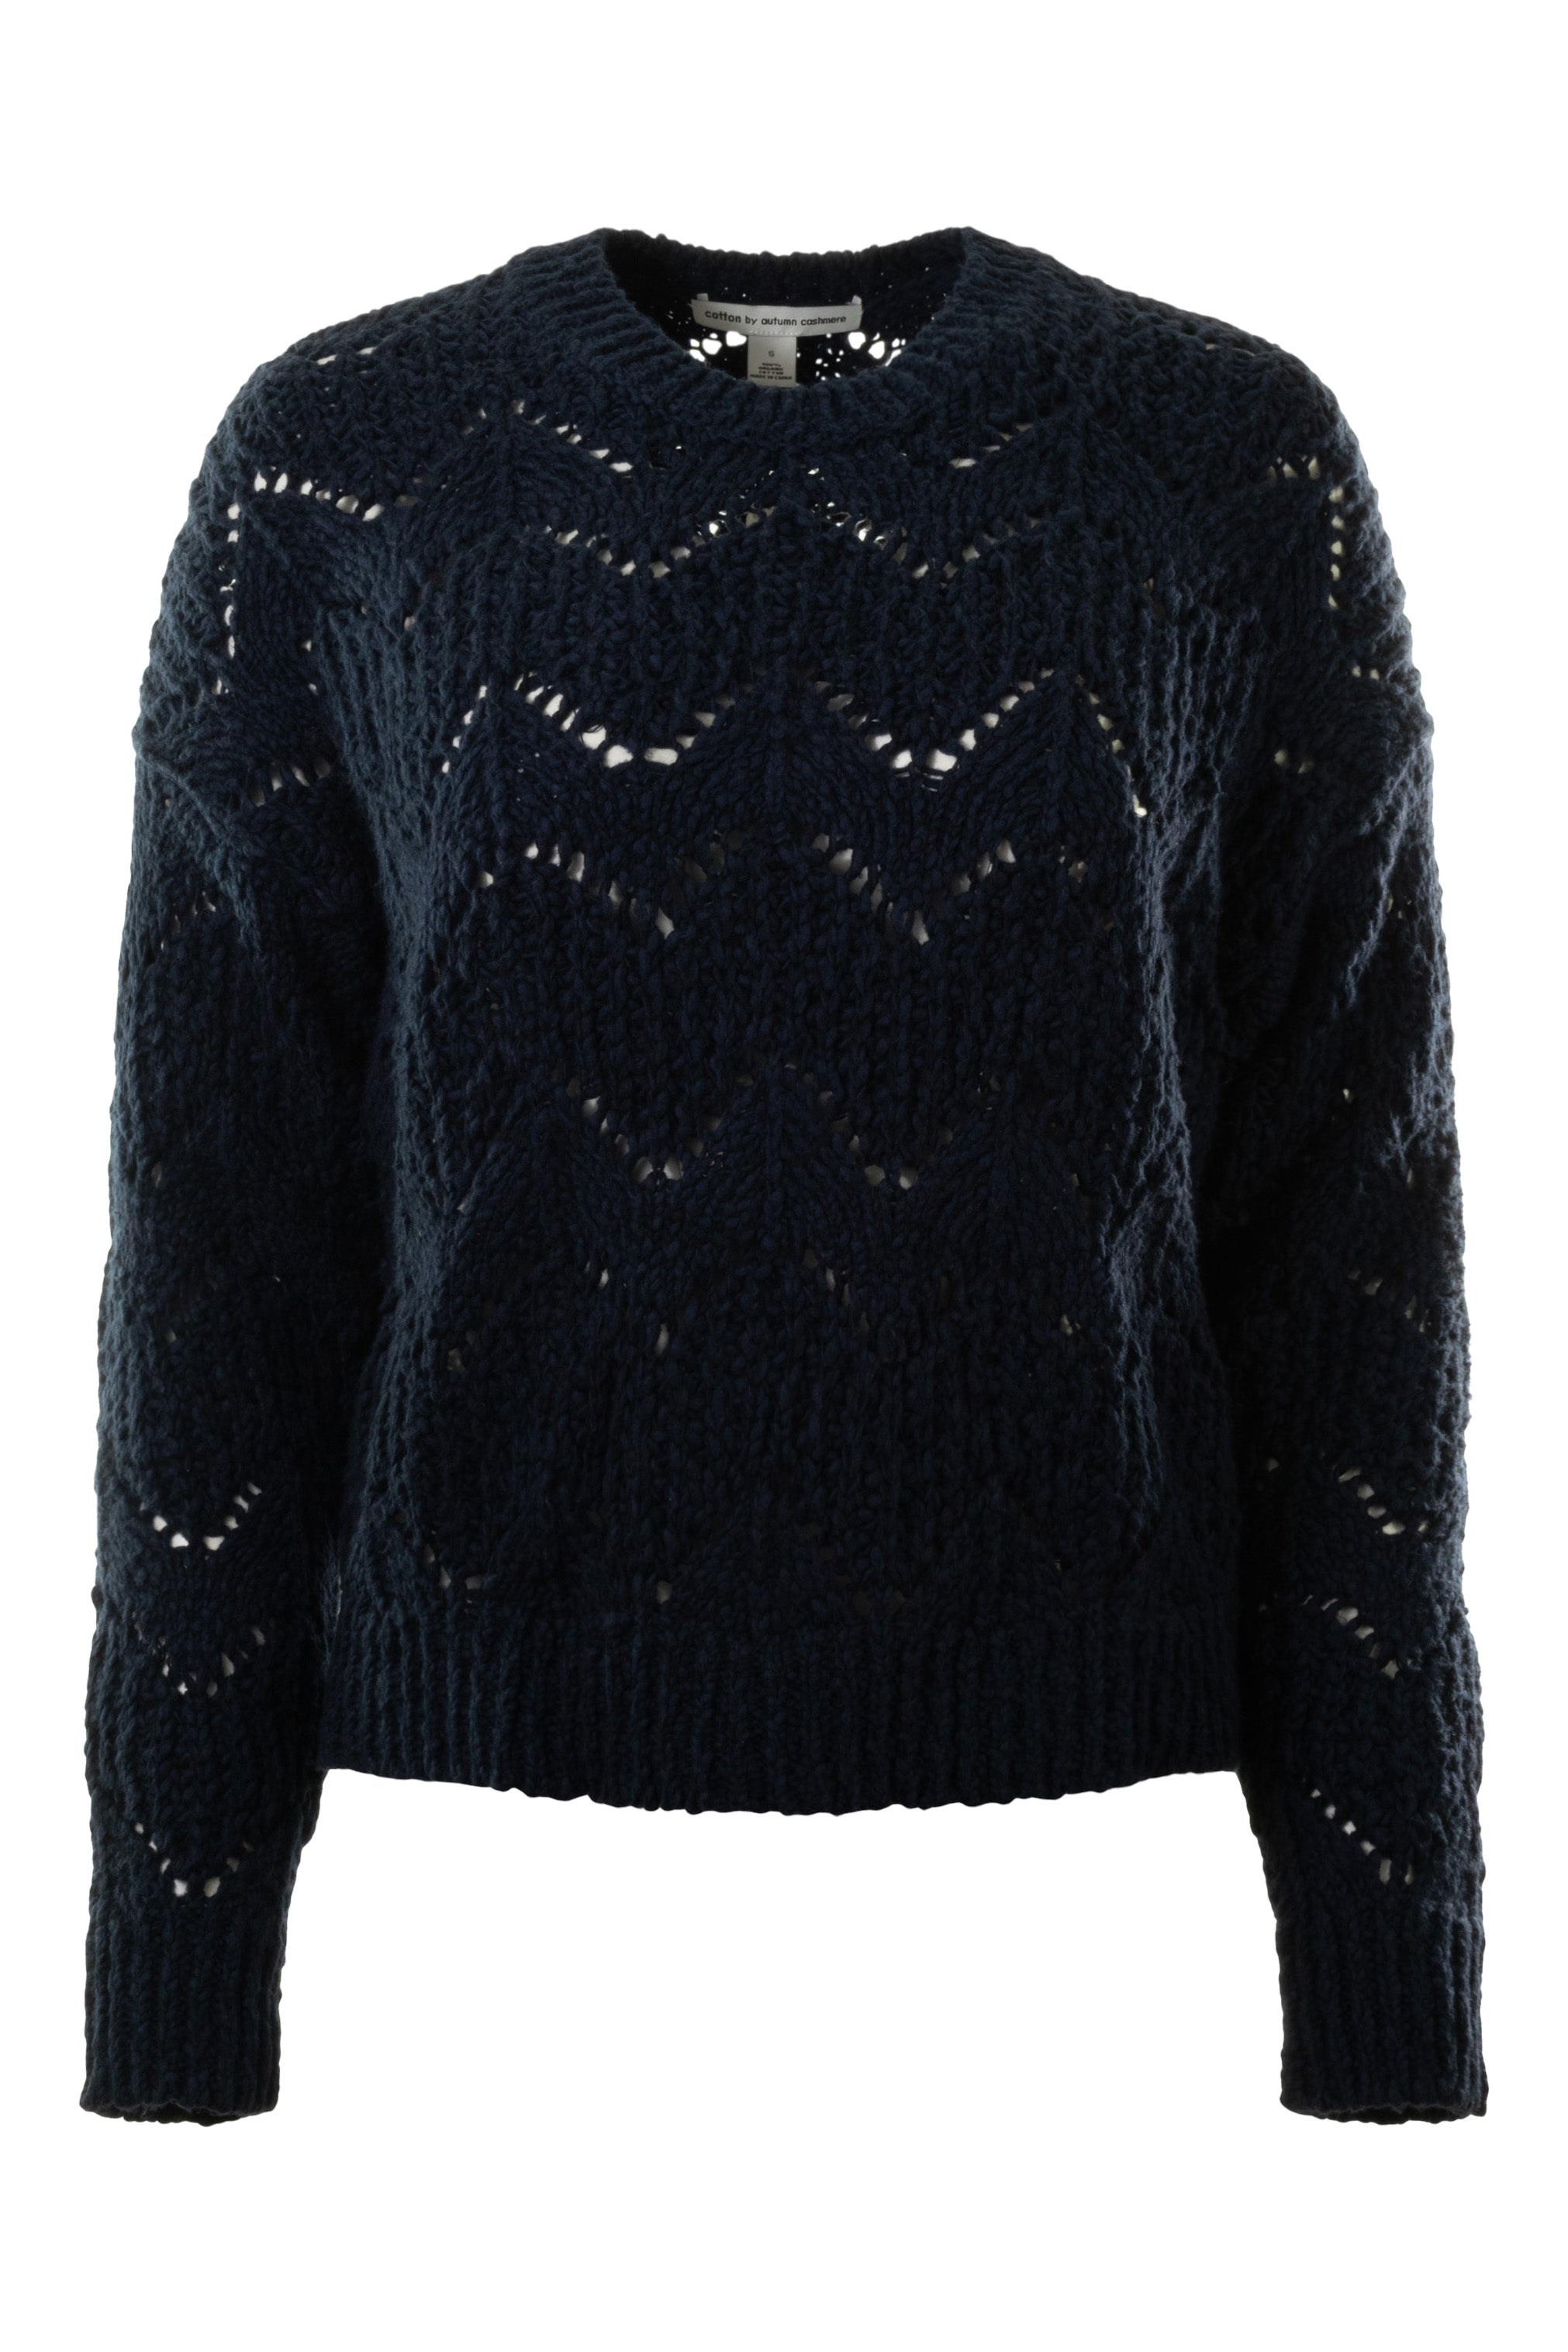 Autumn Cashmere Stitch Mix Crew Solid
 Sweater